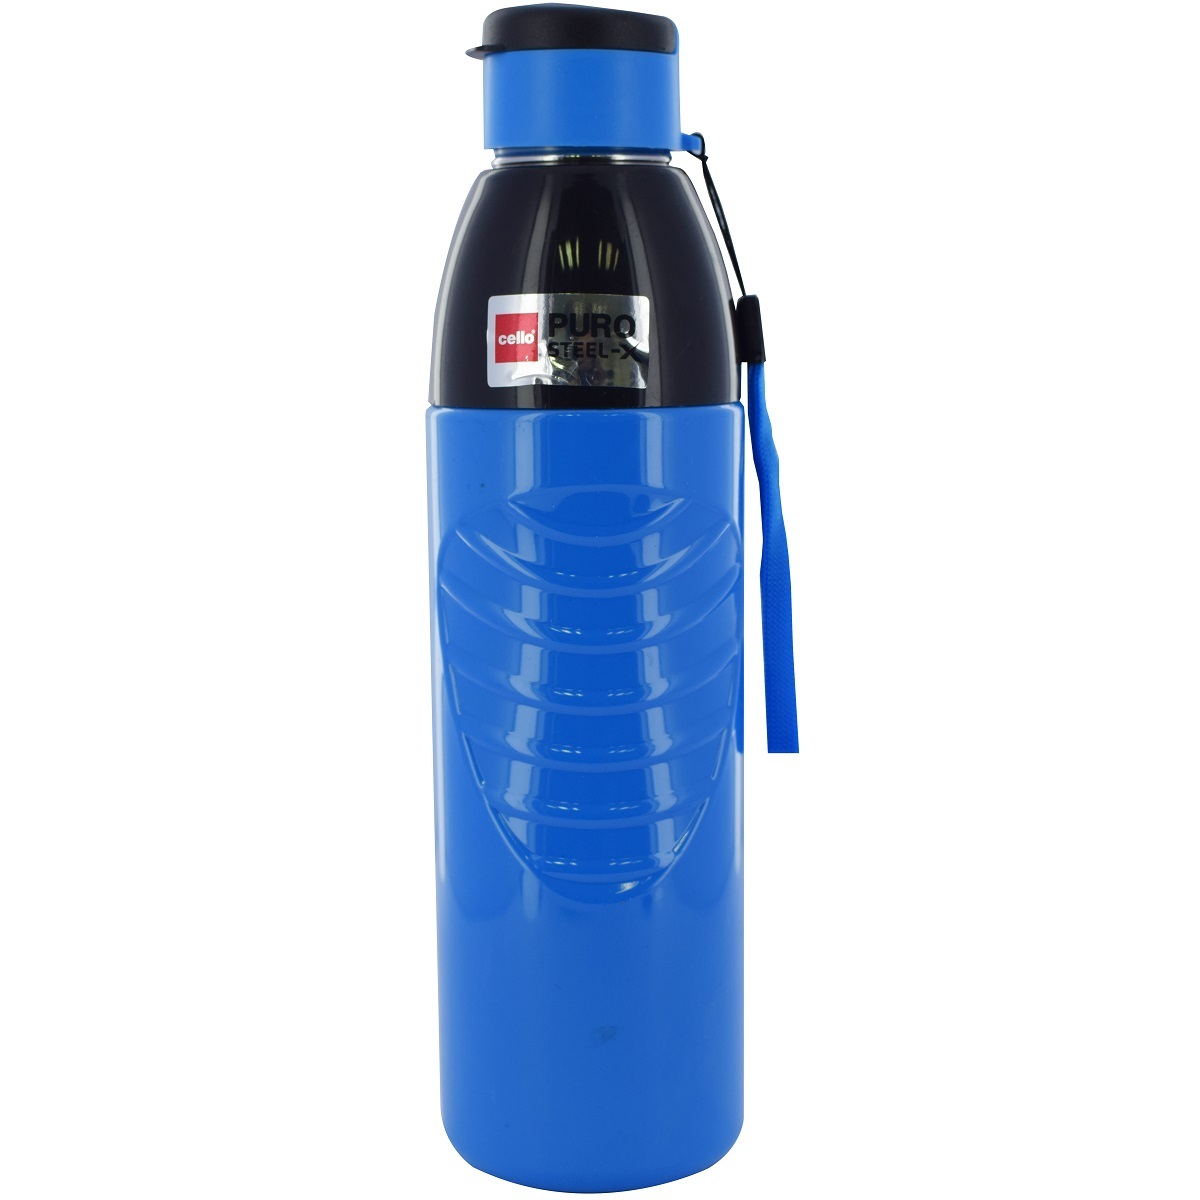 Cello Water Bottle Puro Steel Zen 900ml Assorted Colour